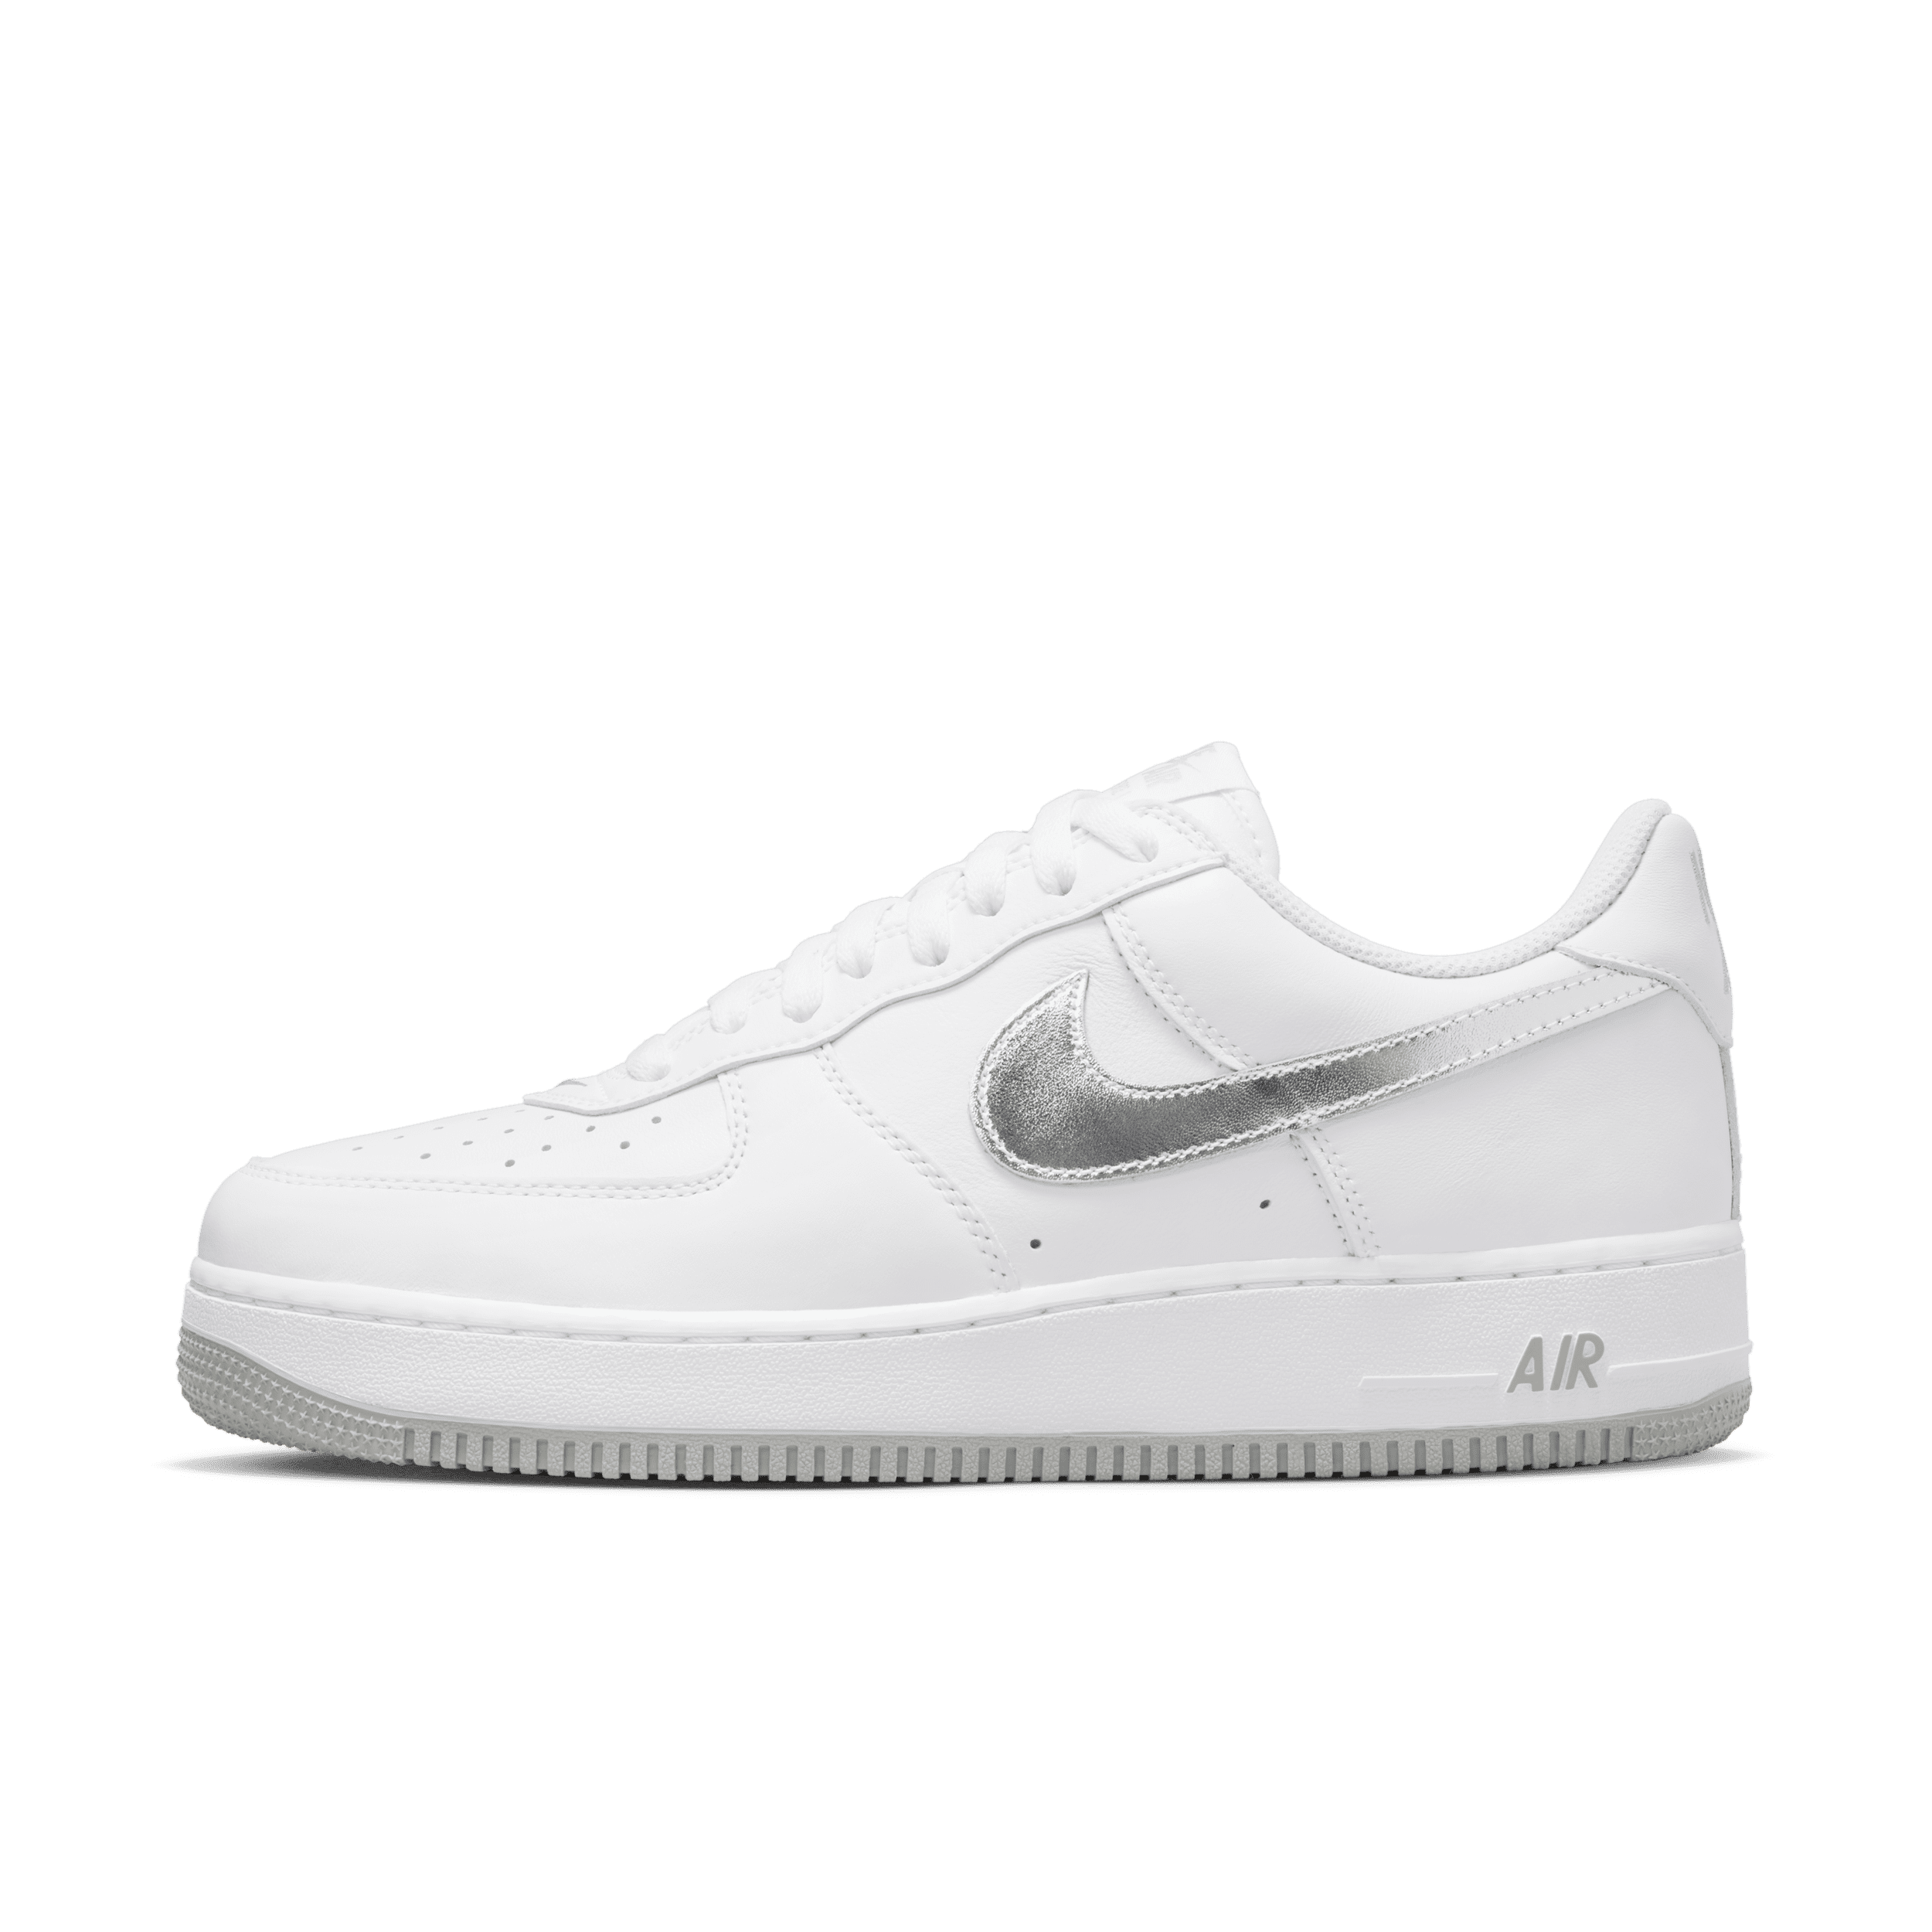 Nike Air Force 1 Low Retro Herrenschuh - Weiß